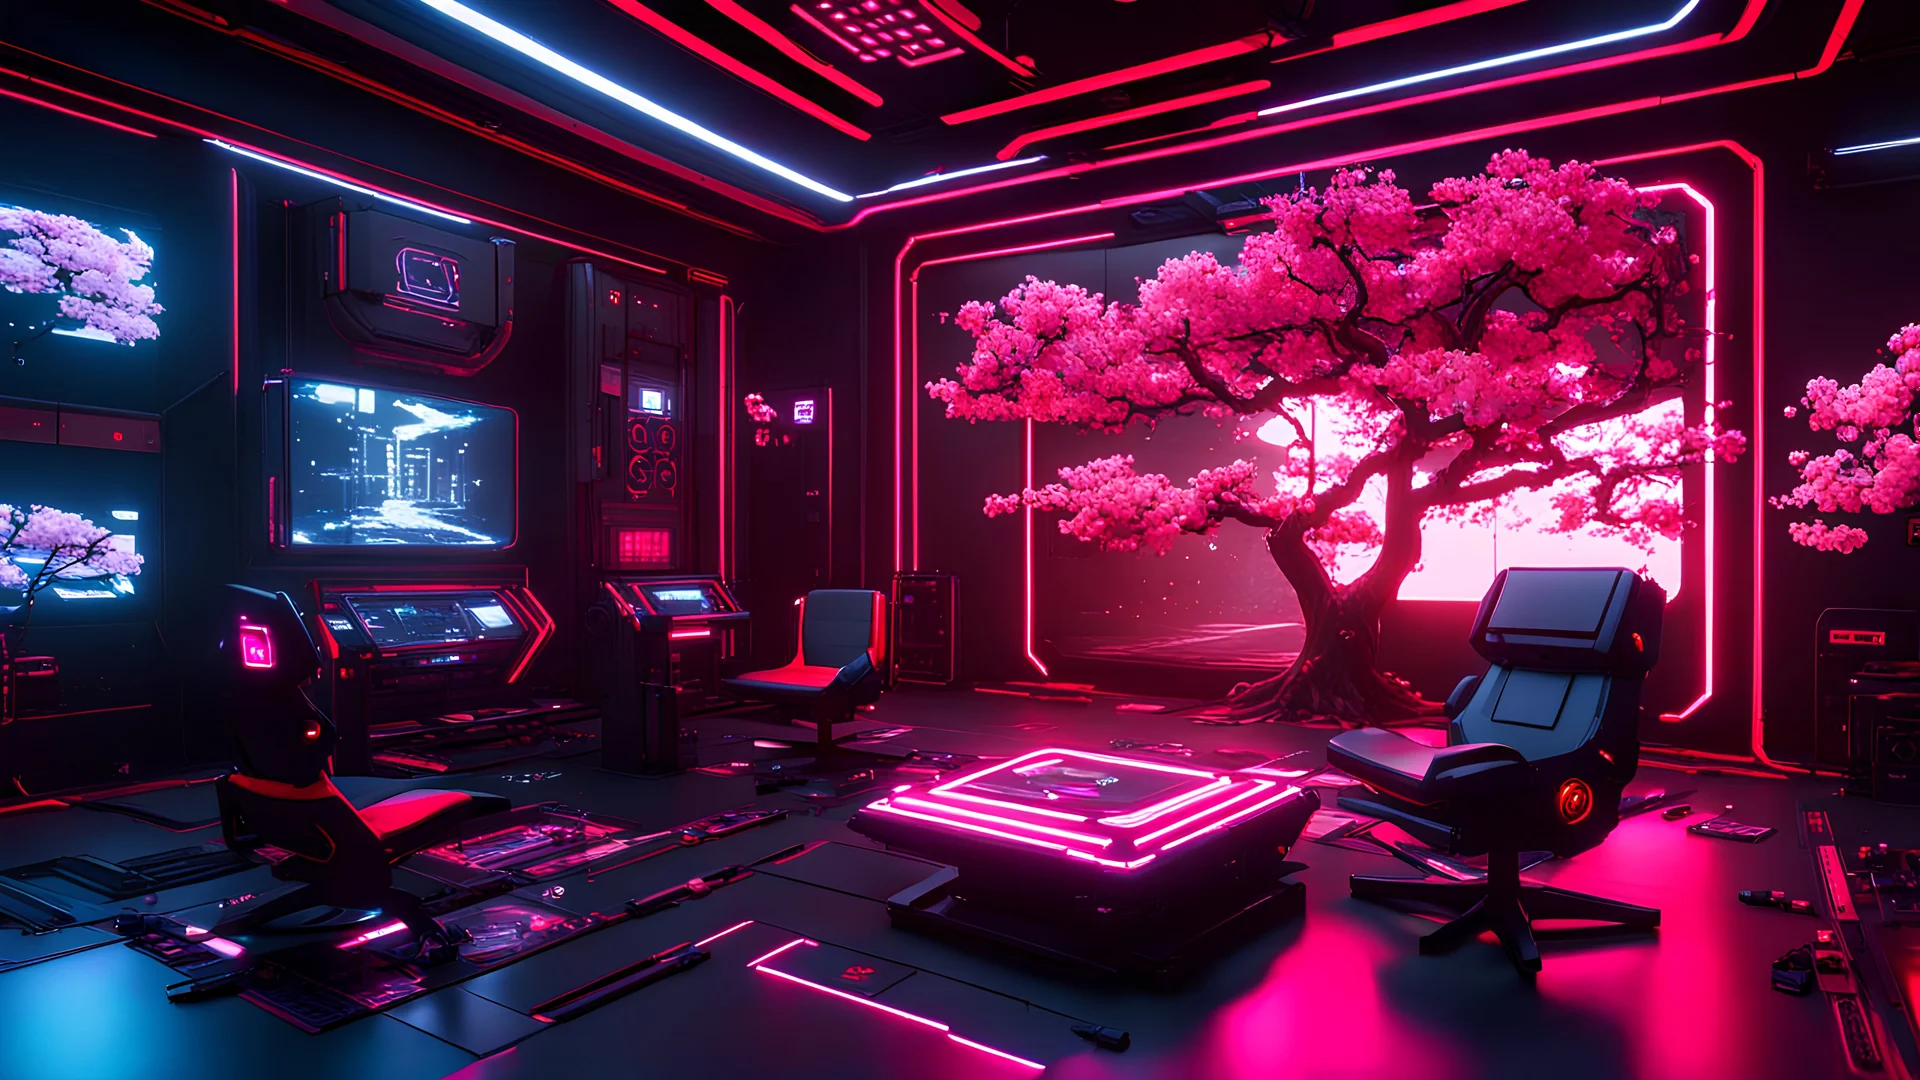 Cyberpunk VR room. Detailed. Rendered in